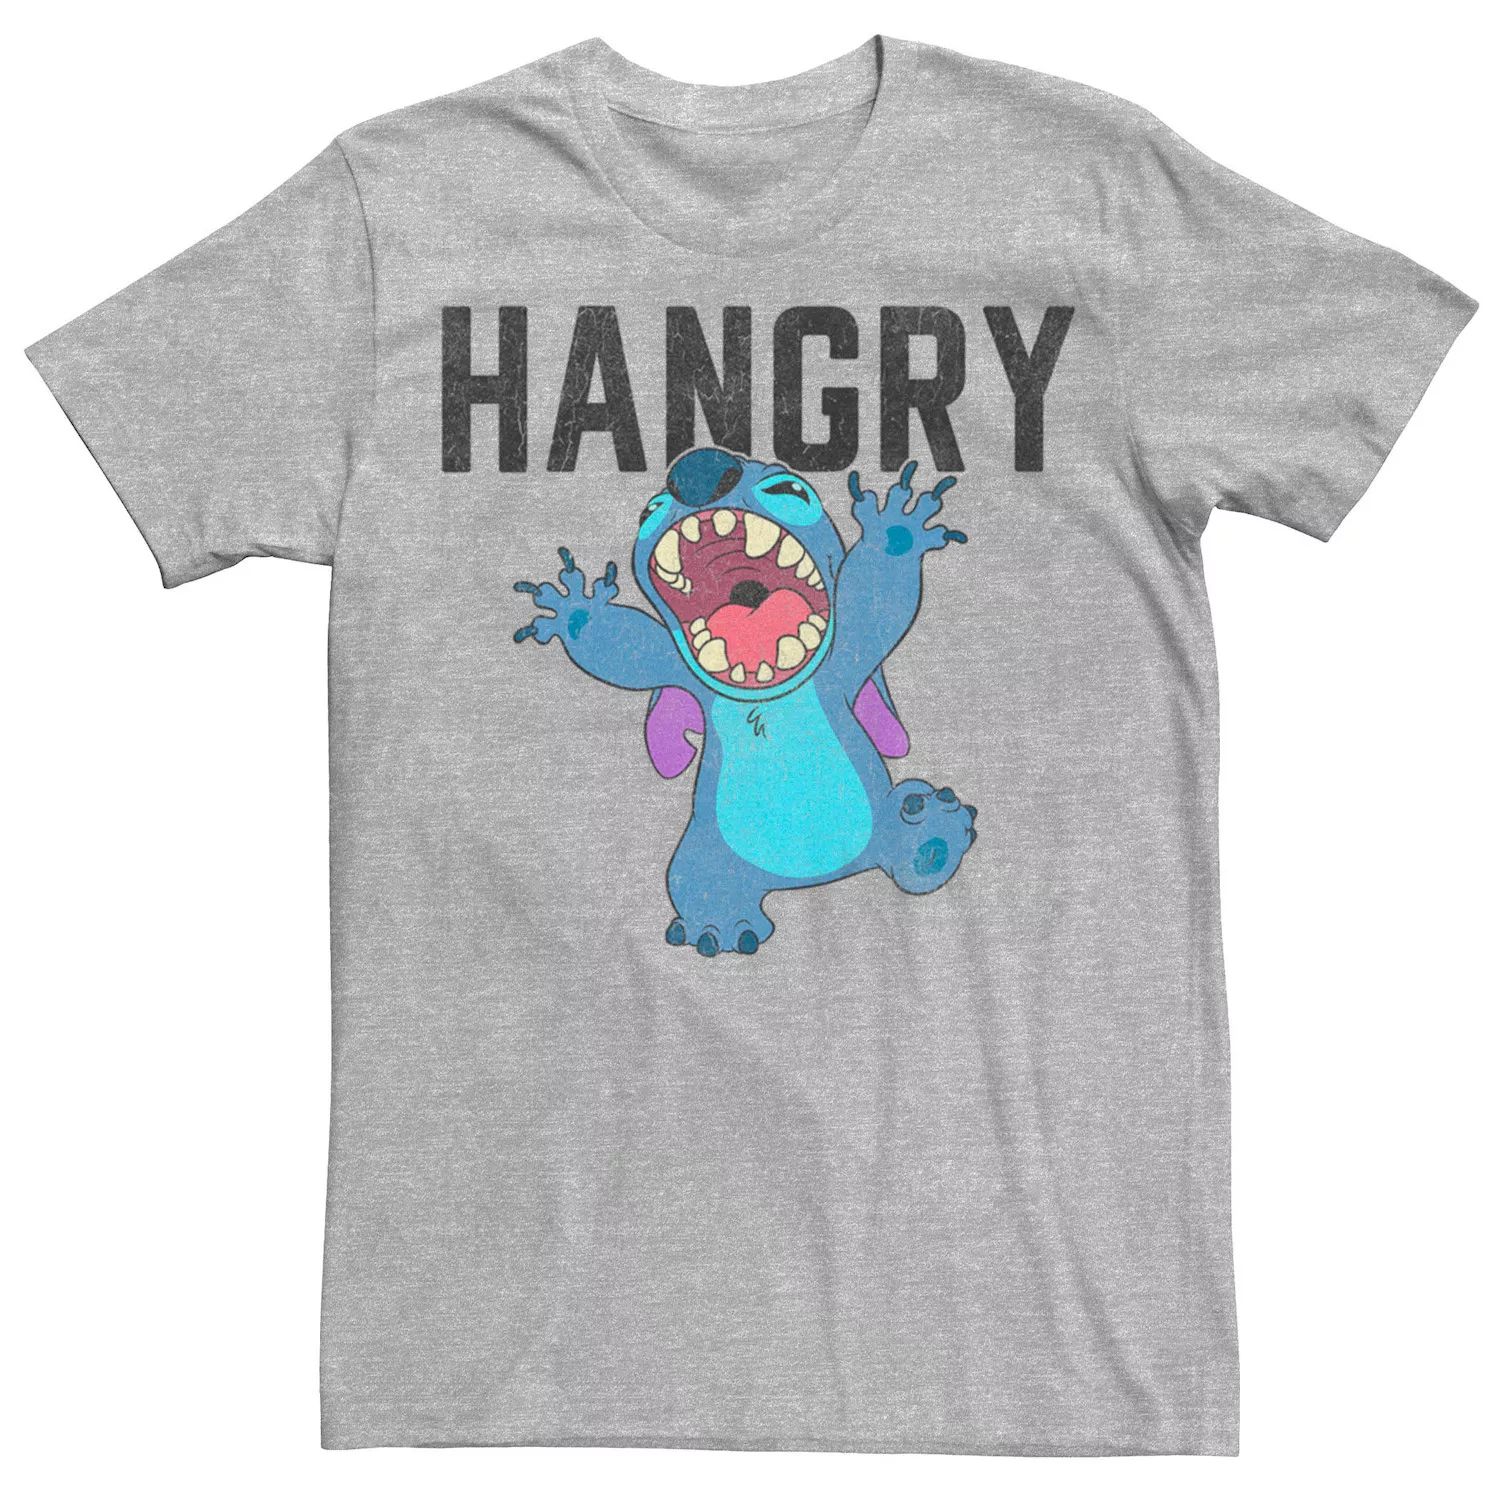 Мужская футболка с рисунком Hangry Alien Disney's Lilo & Stitch